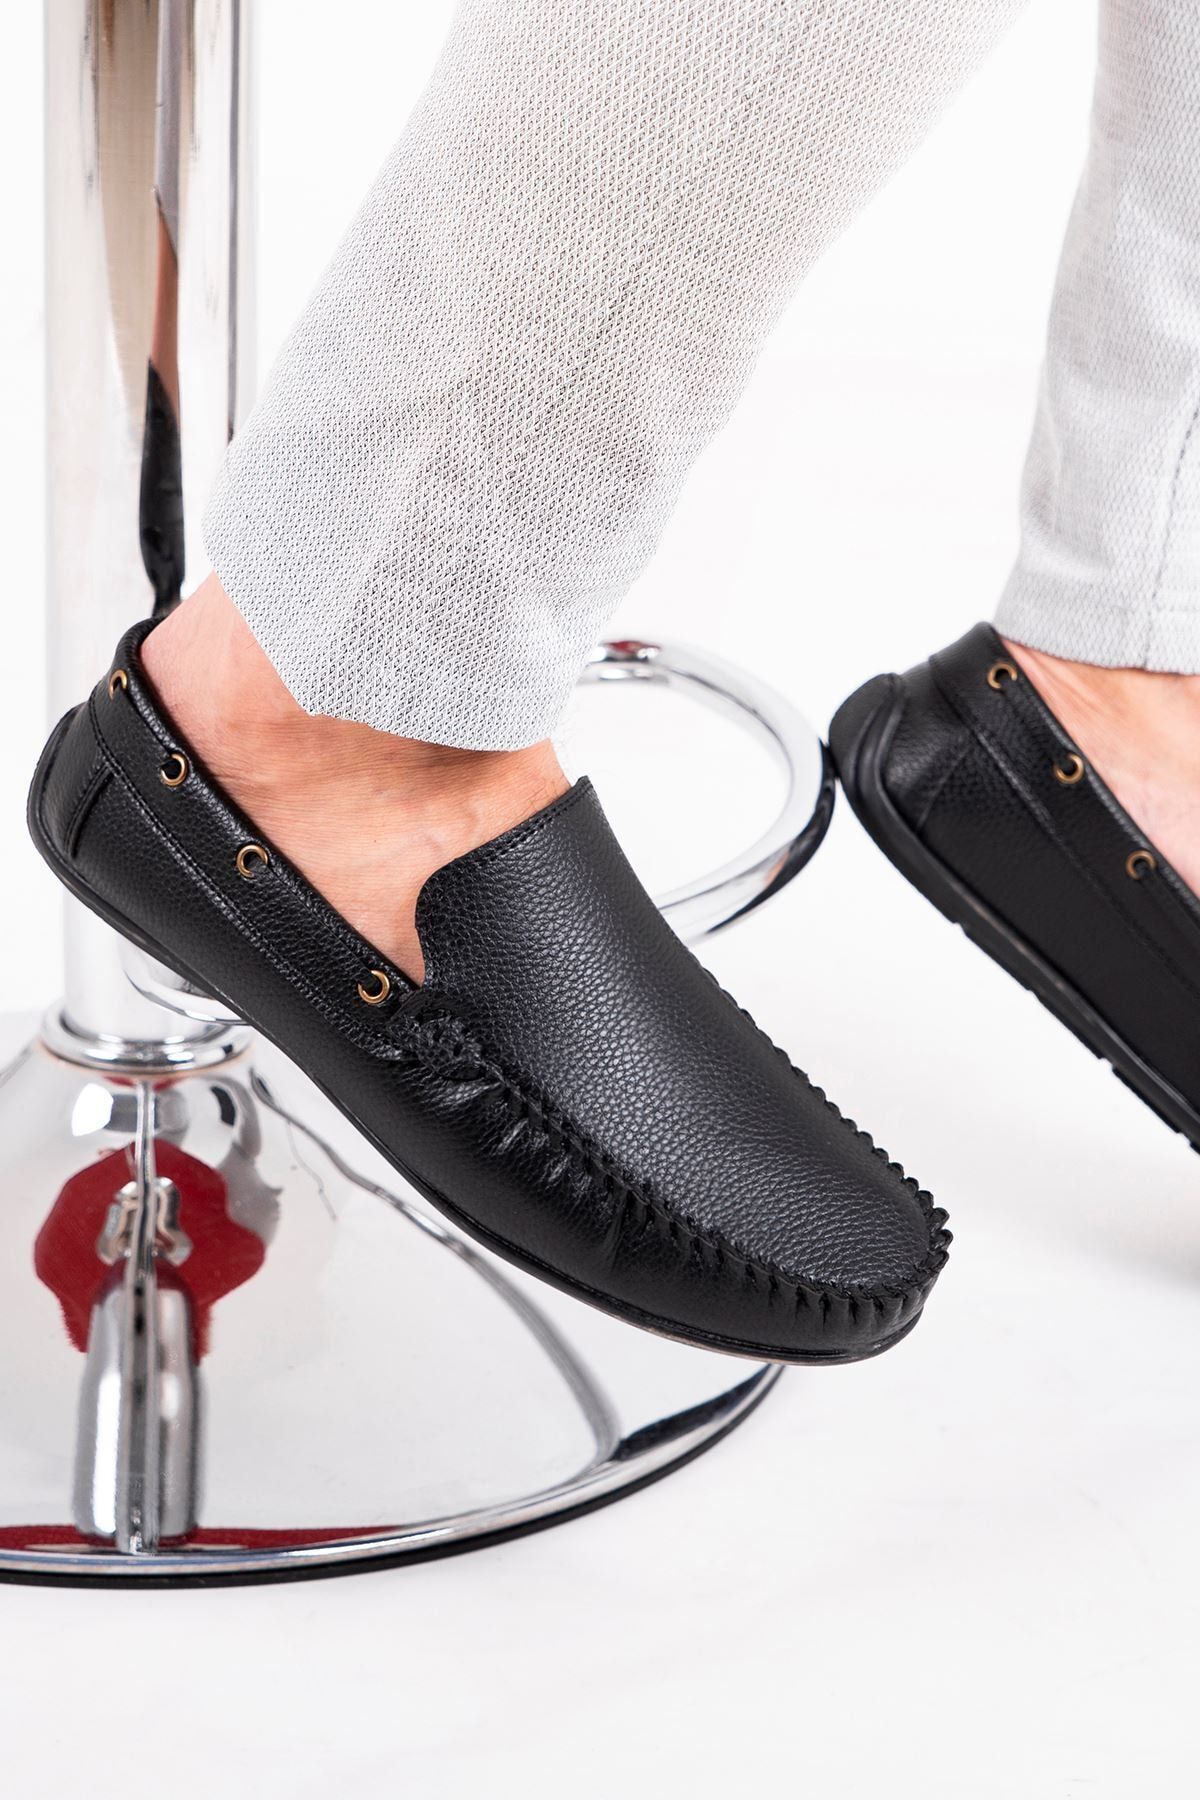 Milano Brava Eko Loafer Erkek Ayakkabı Sdr.101 Siyah